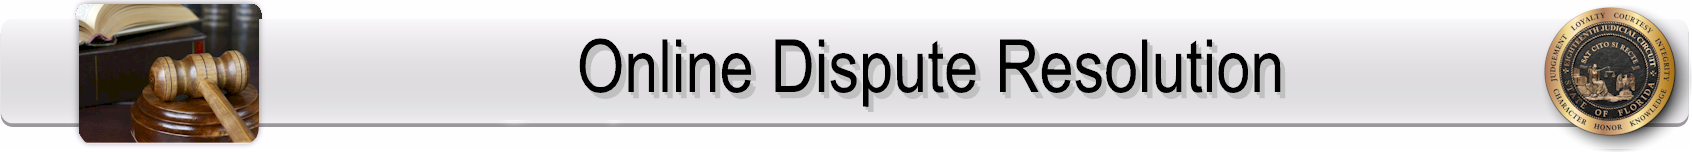 Online Dispute Resolution Center Page Banner